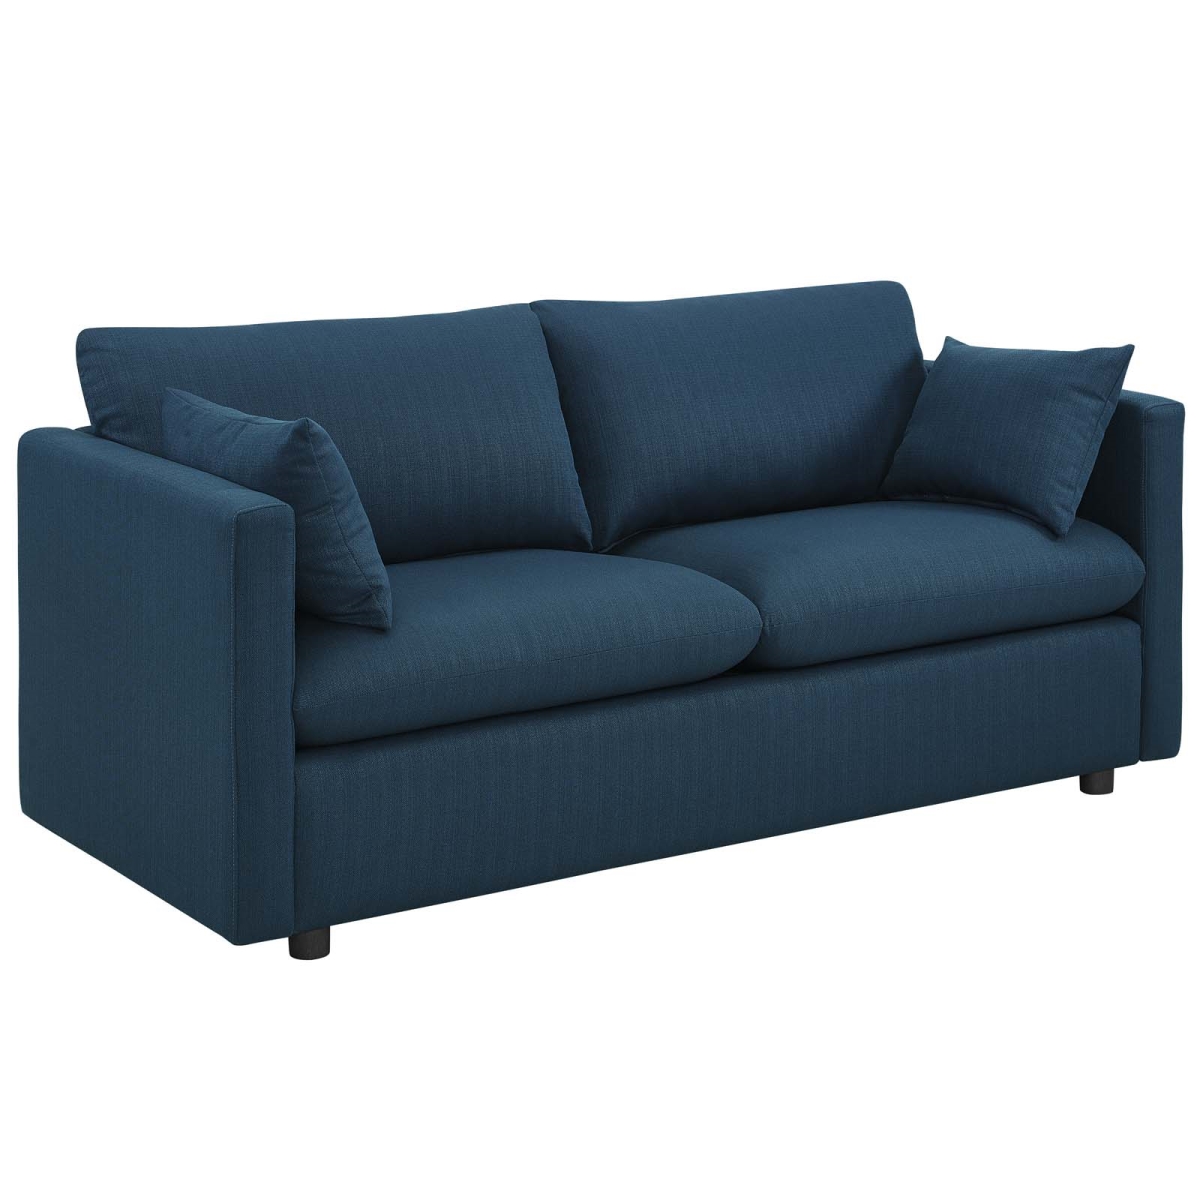 Eei-3044-azu Activate Upholstered Fabric Sofa - Azure, 33.5 X 70 X 31 In.